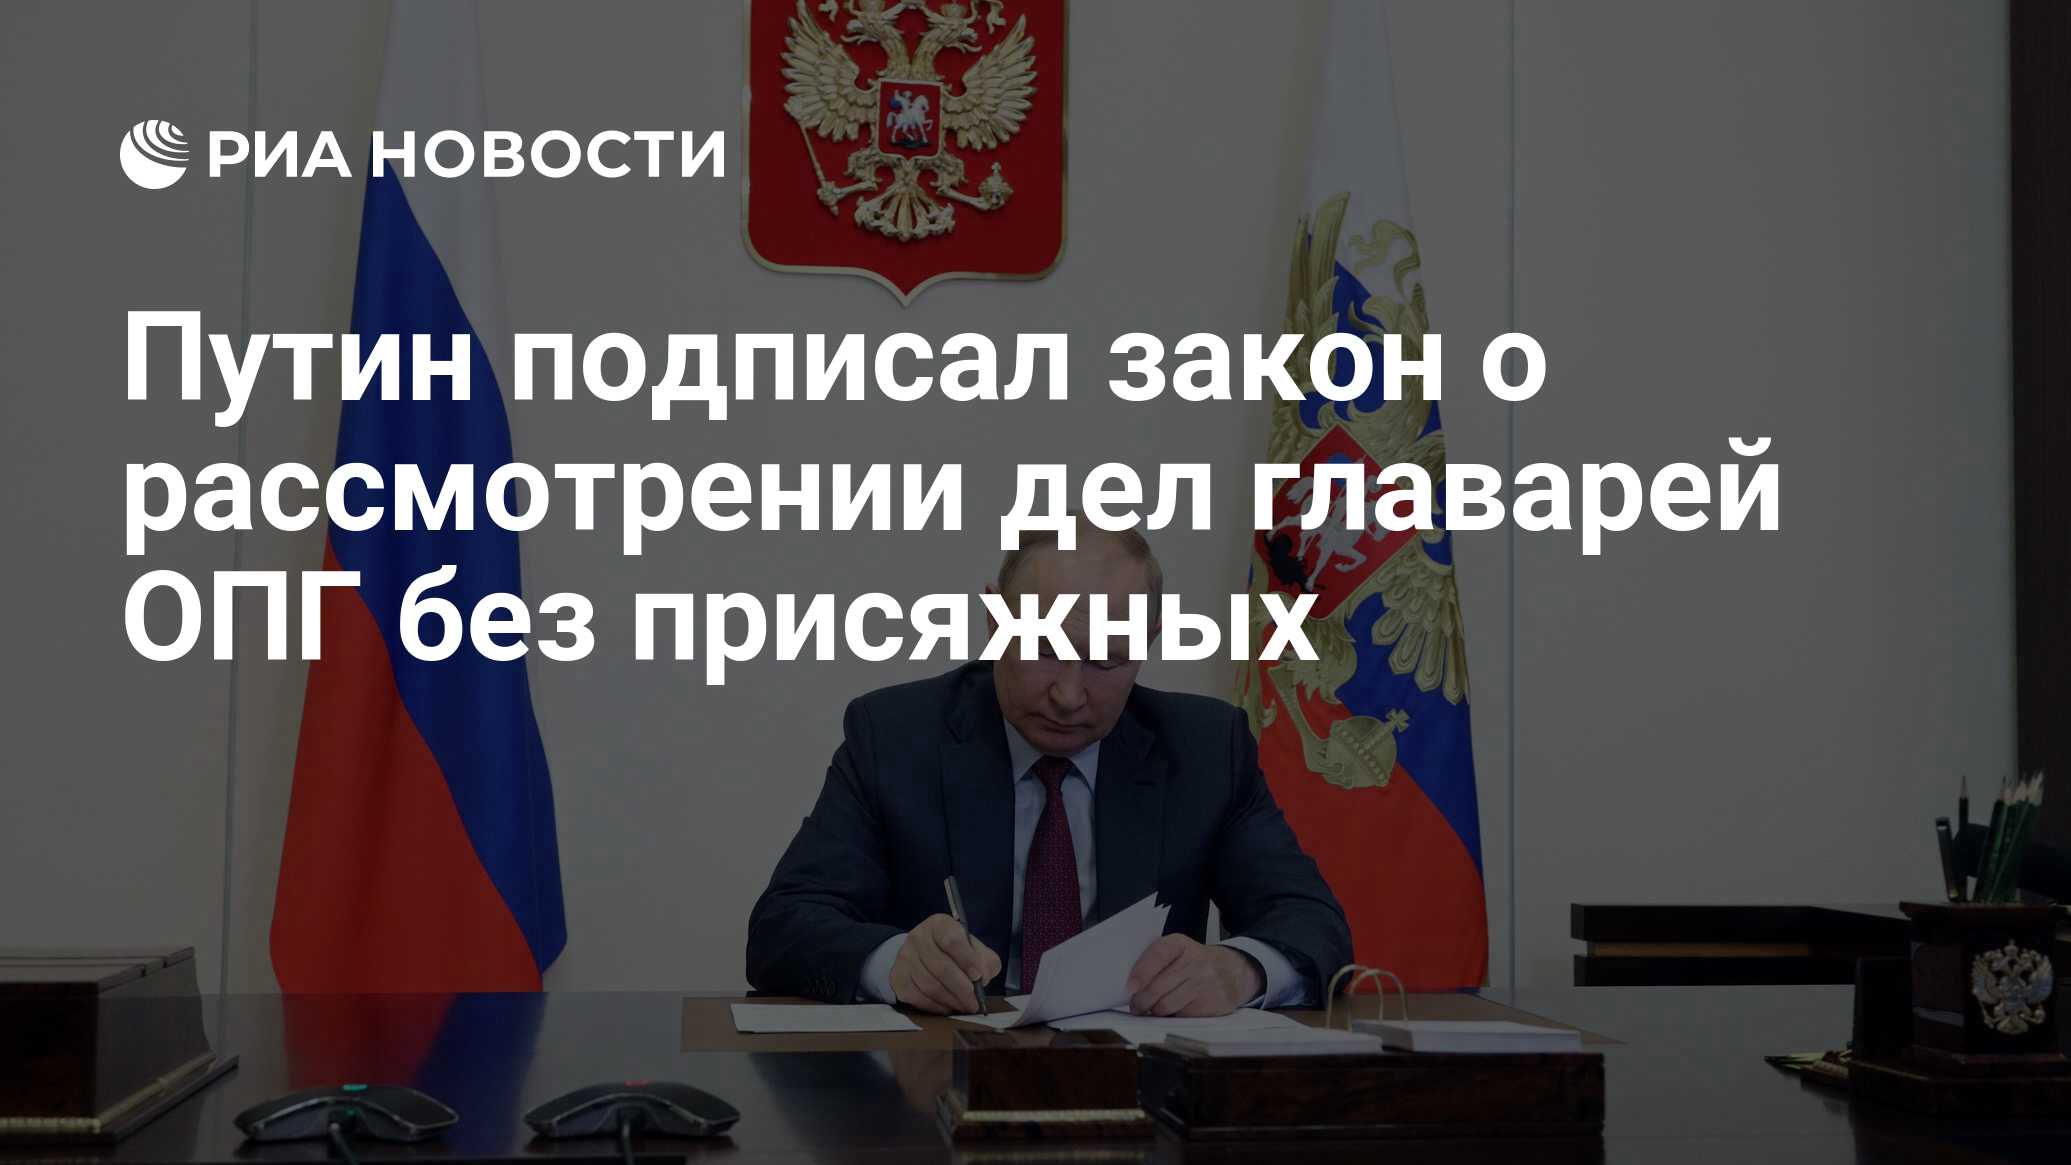 Путин подписал закон об отмене техосмотра